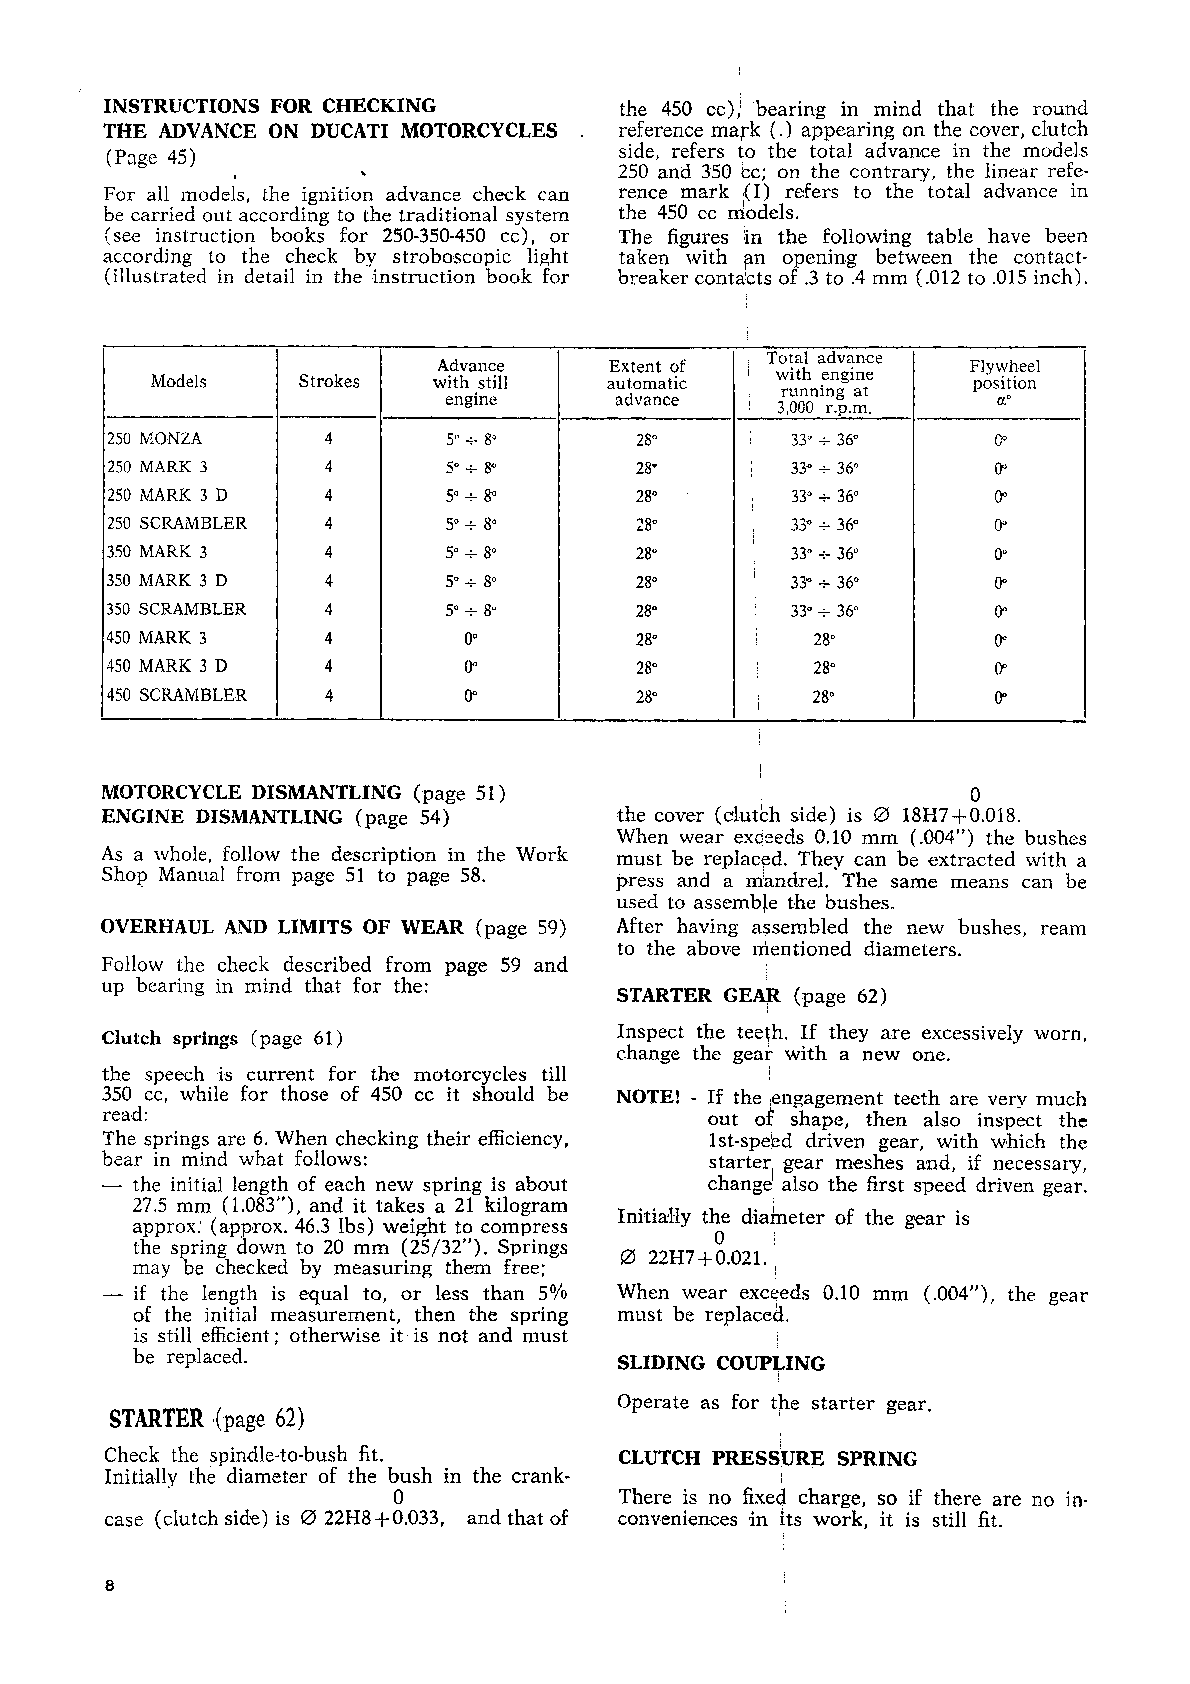 1968-1972 Ducati 250 Monza Service Manual